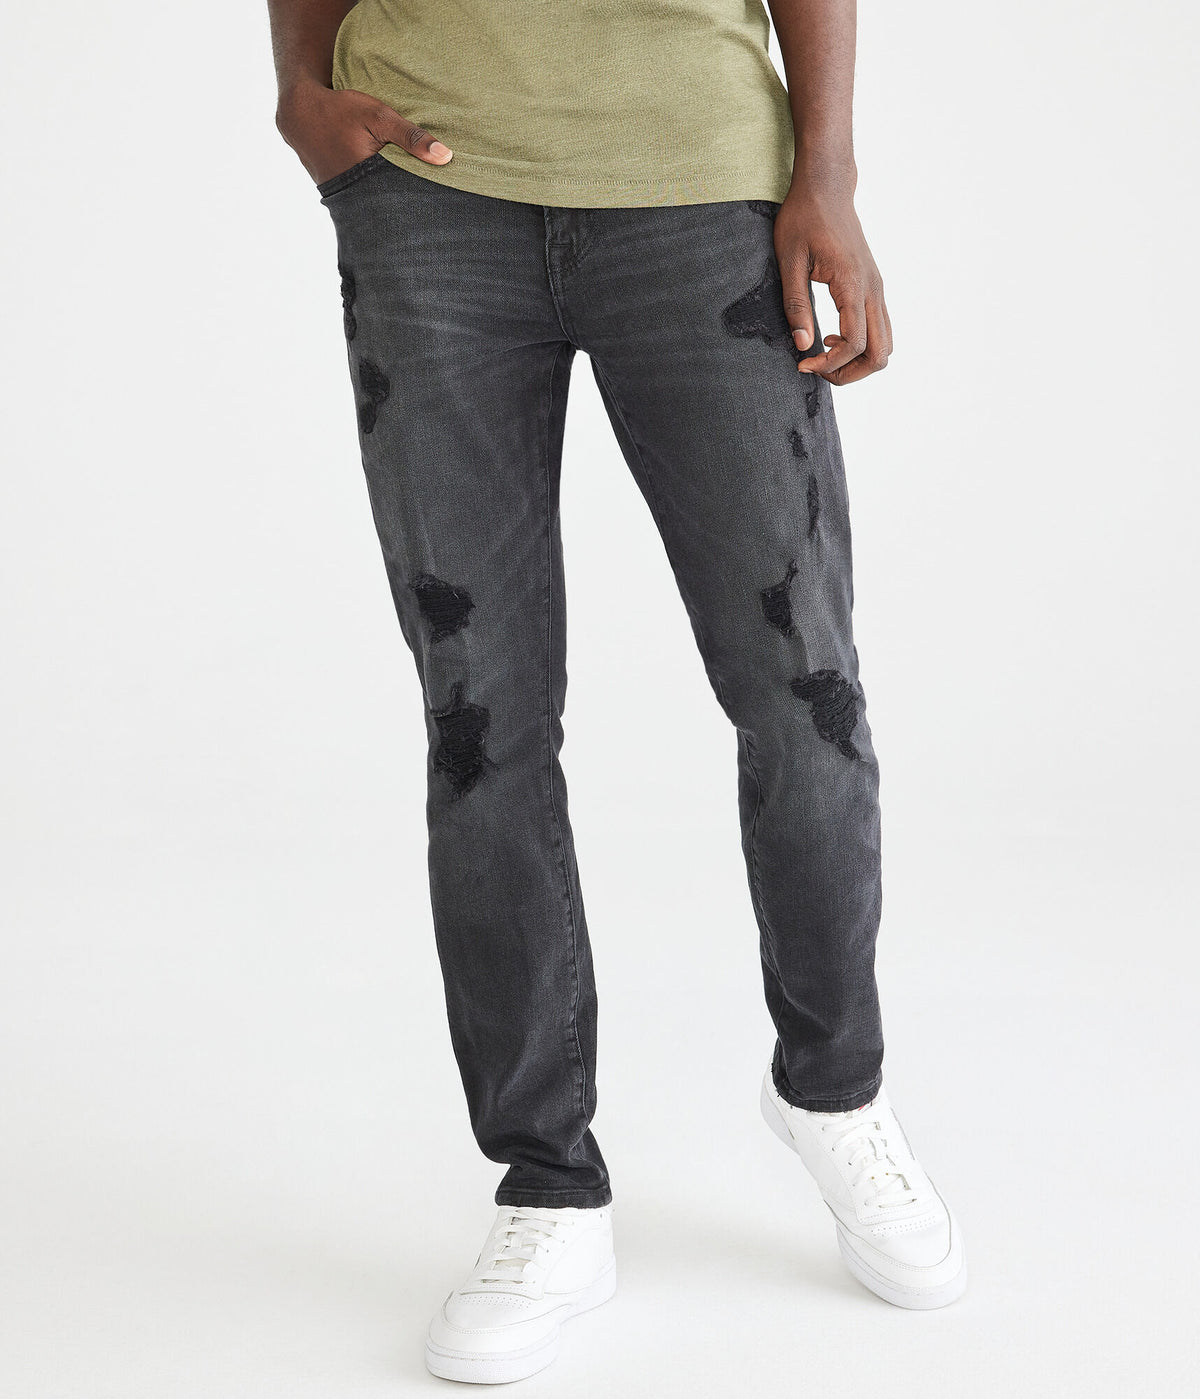 Aeropostale Mens' Super Skinny Premium Air Jean -  - Size 34X34 - Cotton - Teen Fashion & Clothing Black